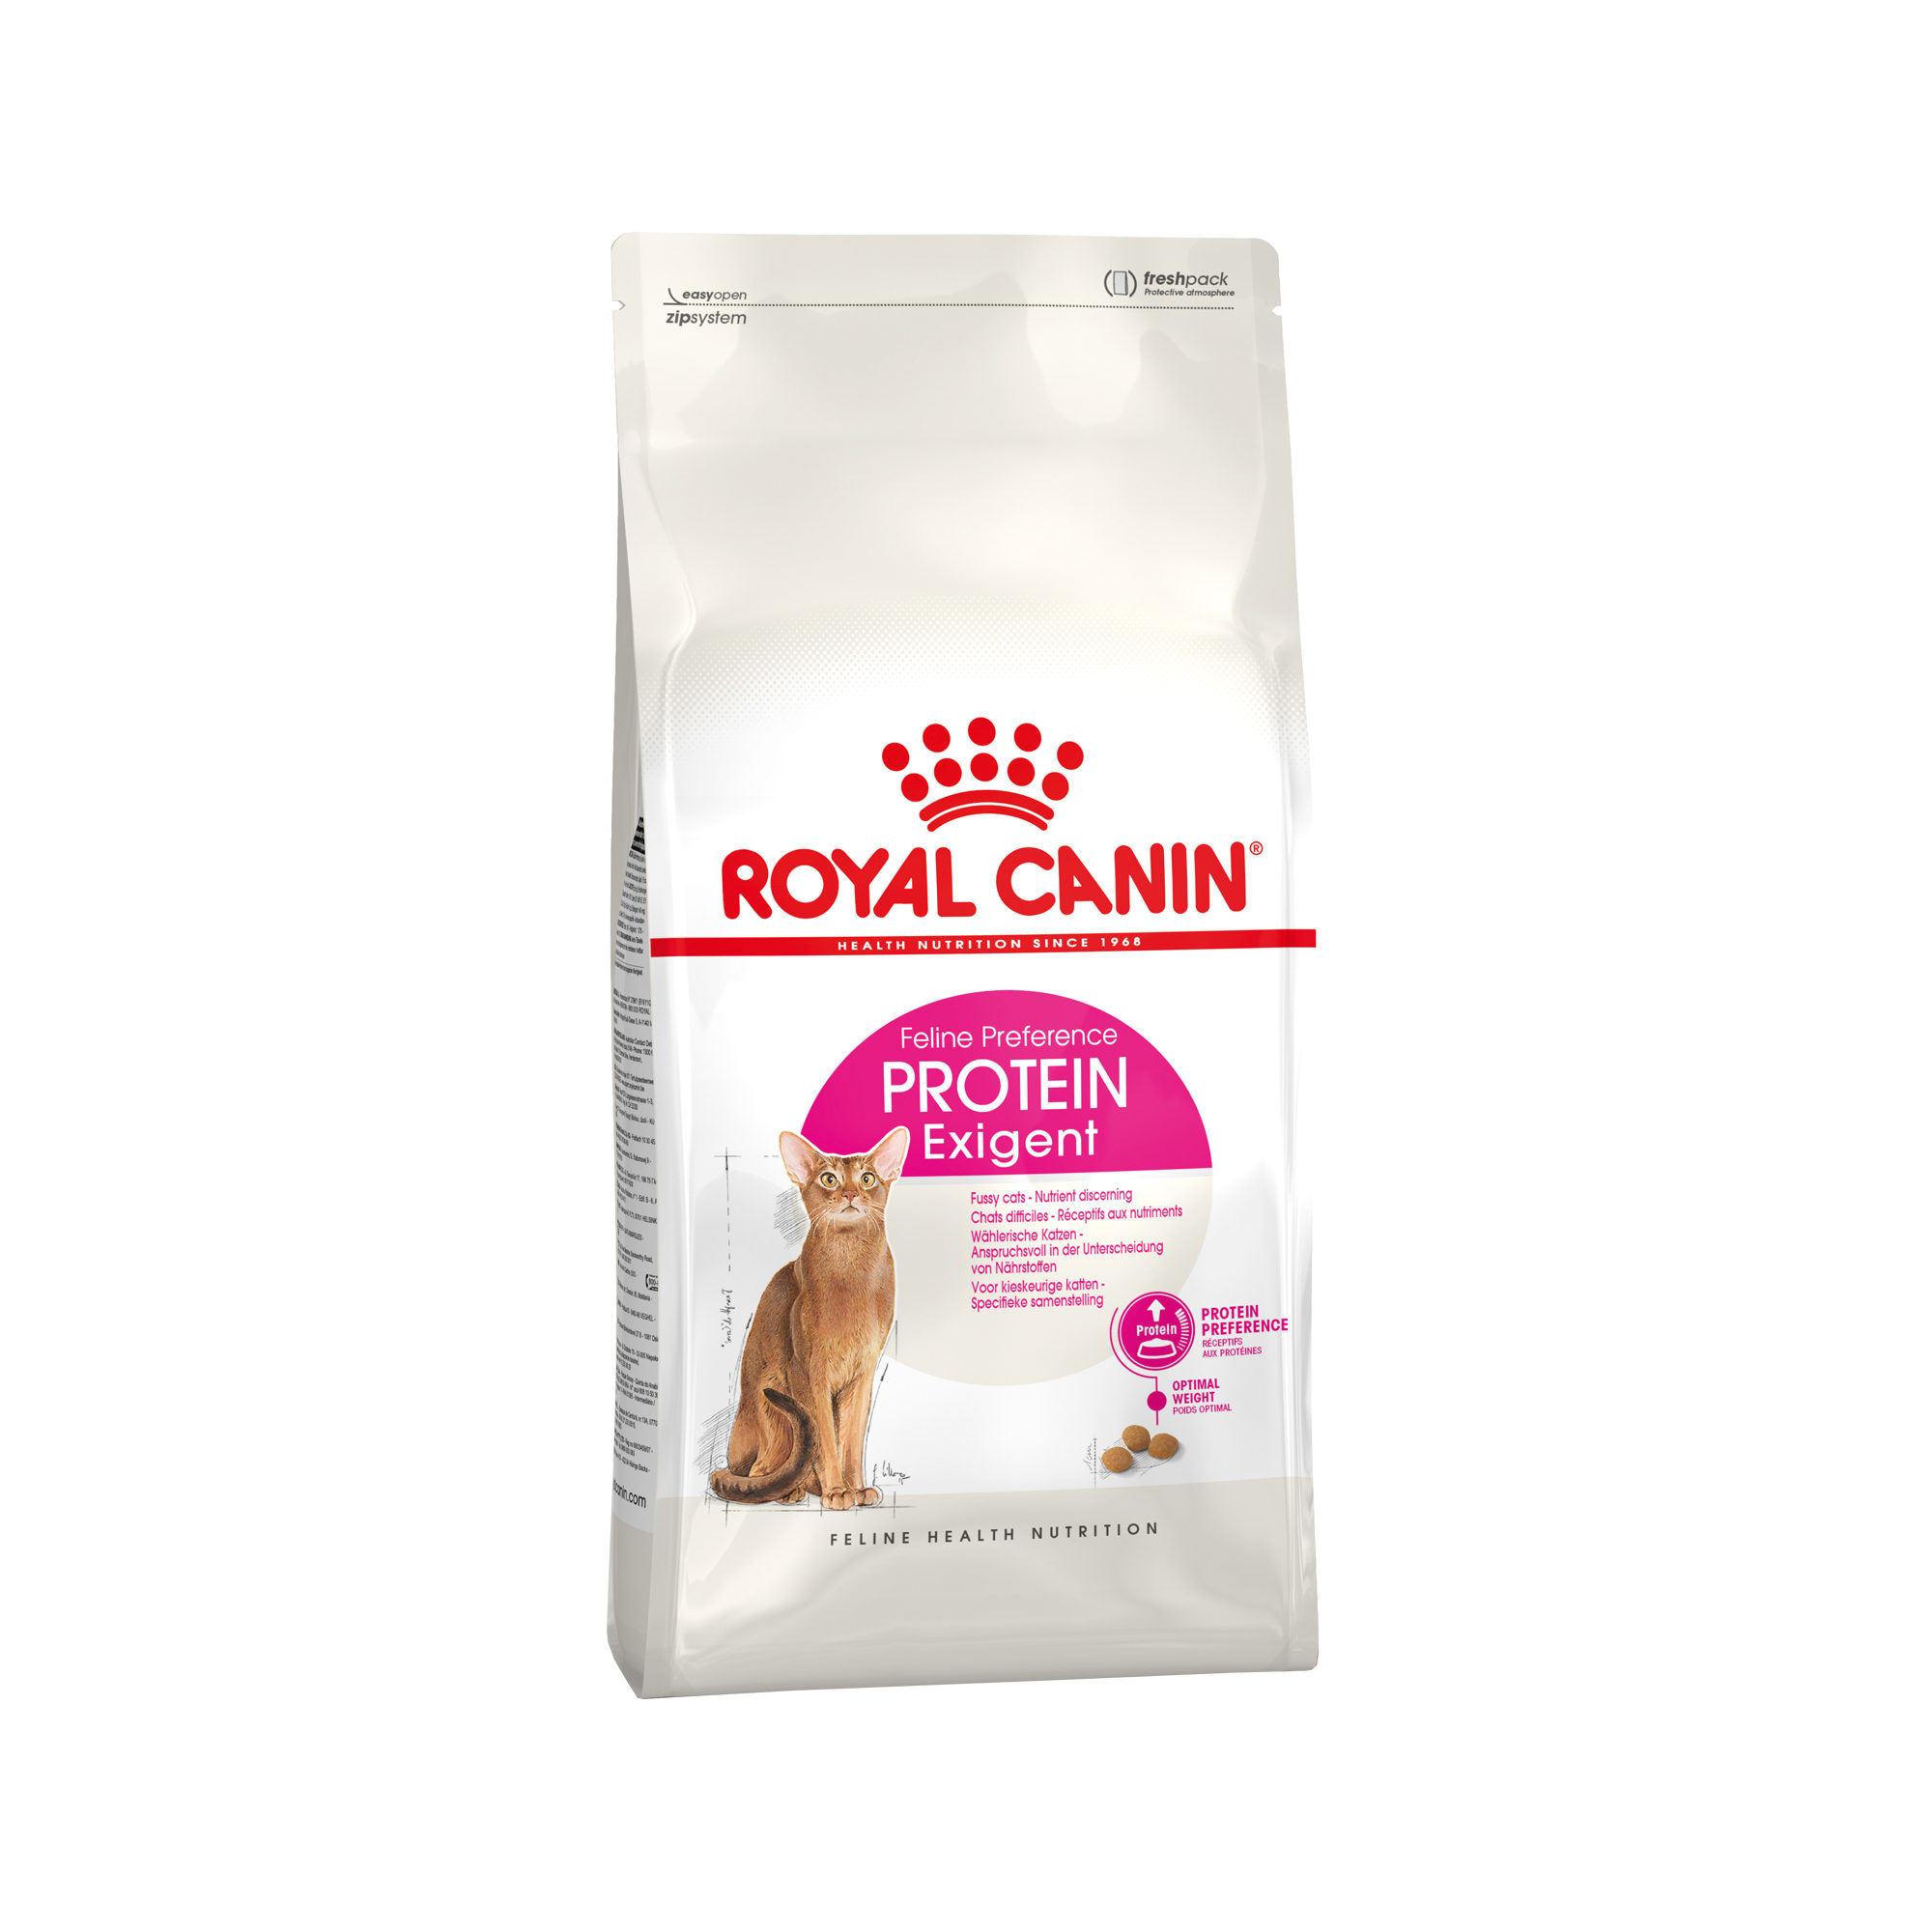 Royal Canin Protein Exigent Katzenfutter - 10 kg